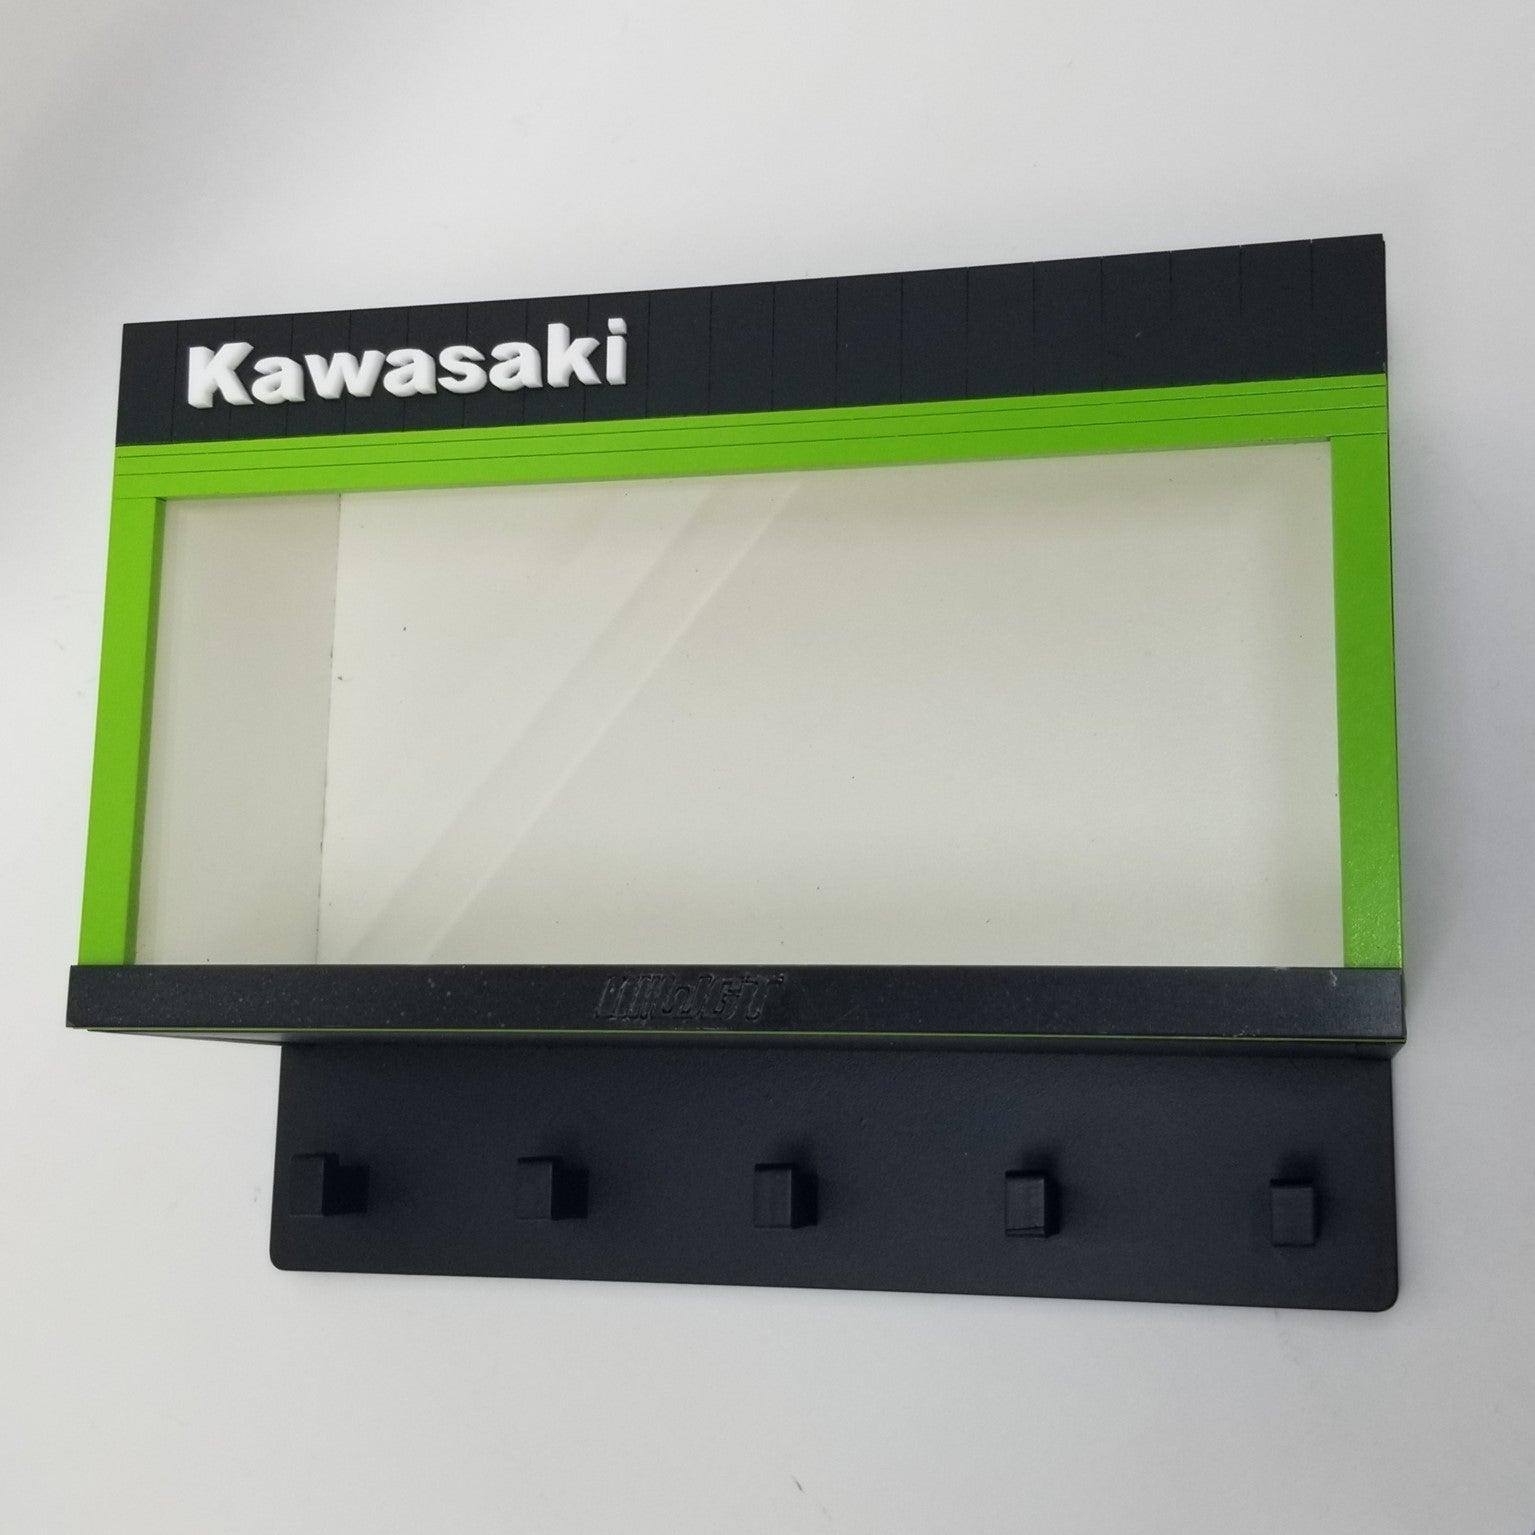 Kawasaki Dealership Wall Key Hook Rack - Exclusive item - Handcrafted Key Holder - Brazilian Shop